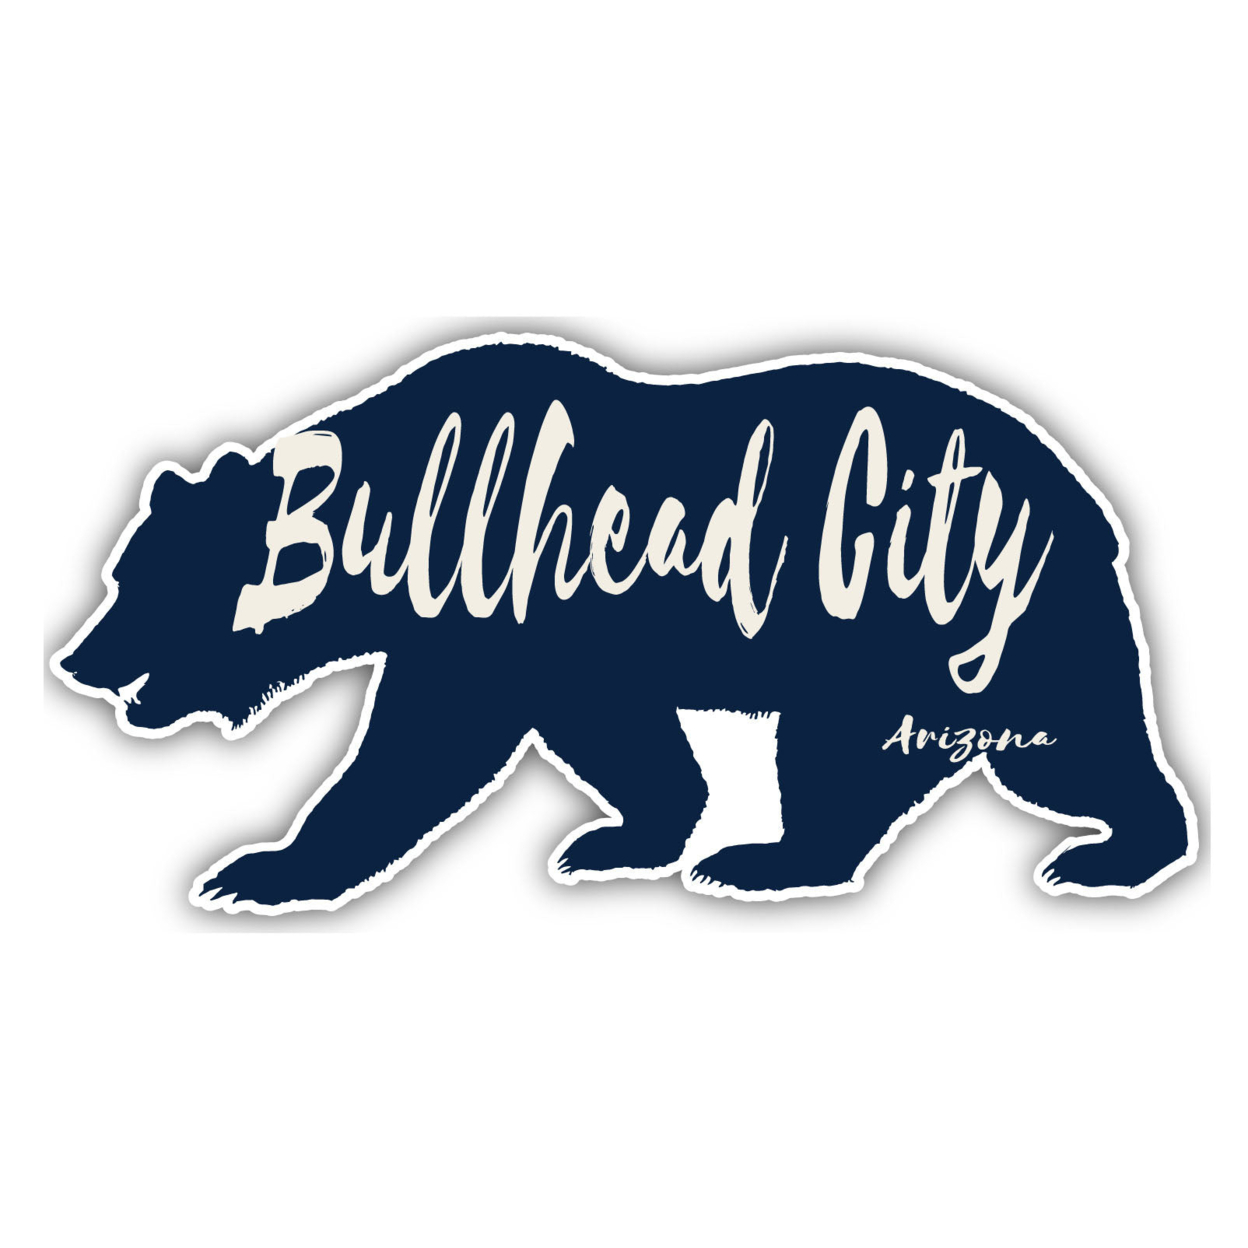 Bullhead City Arizona Souvenir Decorative Stickers (Choose Theme And Size) - Single Unit, 2-Inch, Bear